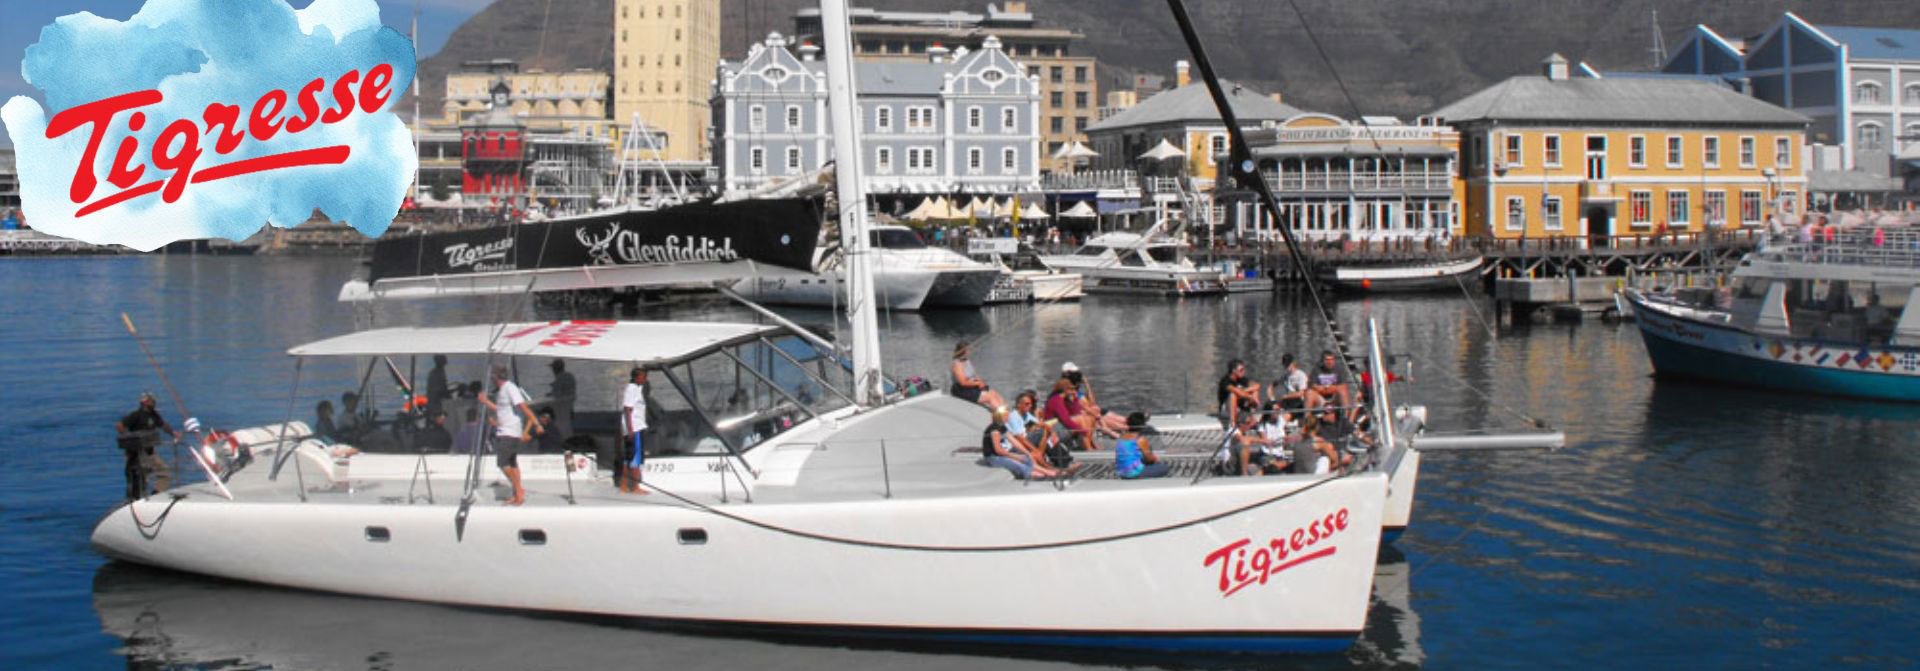 Tigresse Sailing Catamaran Banner Image